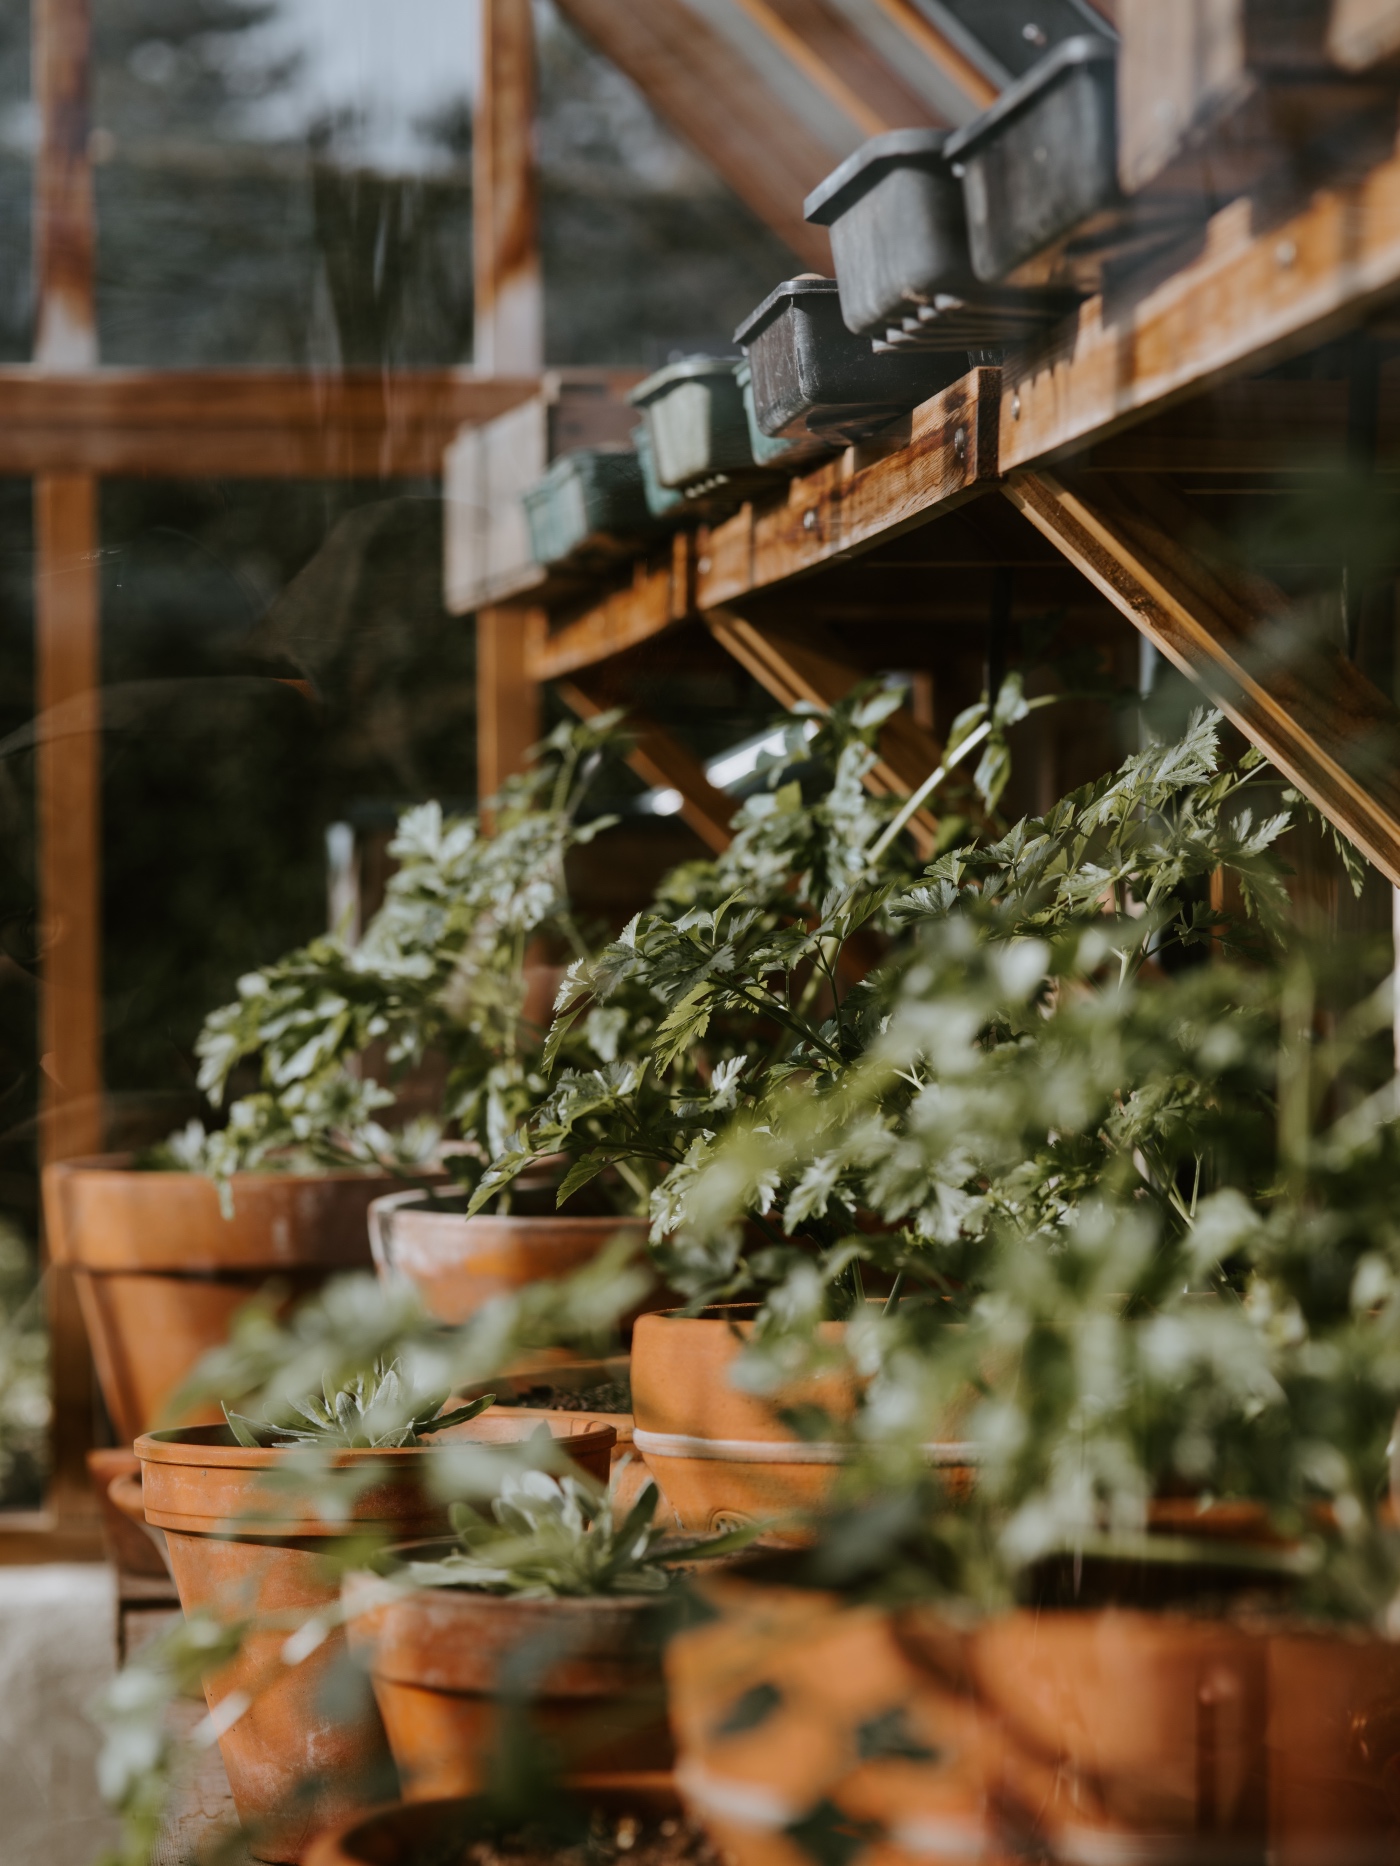 greenhouse gardening basics tomatoes vegetables and more - gardening tutorials